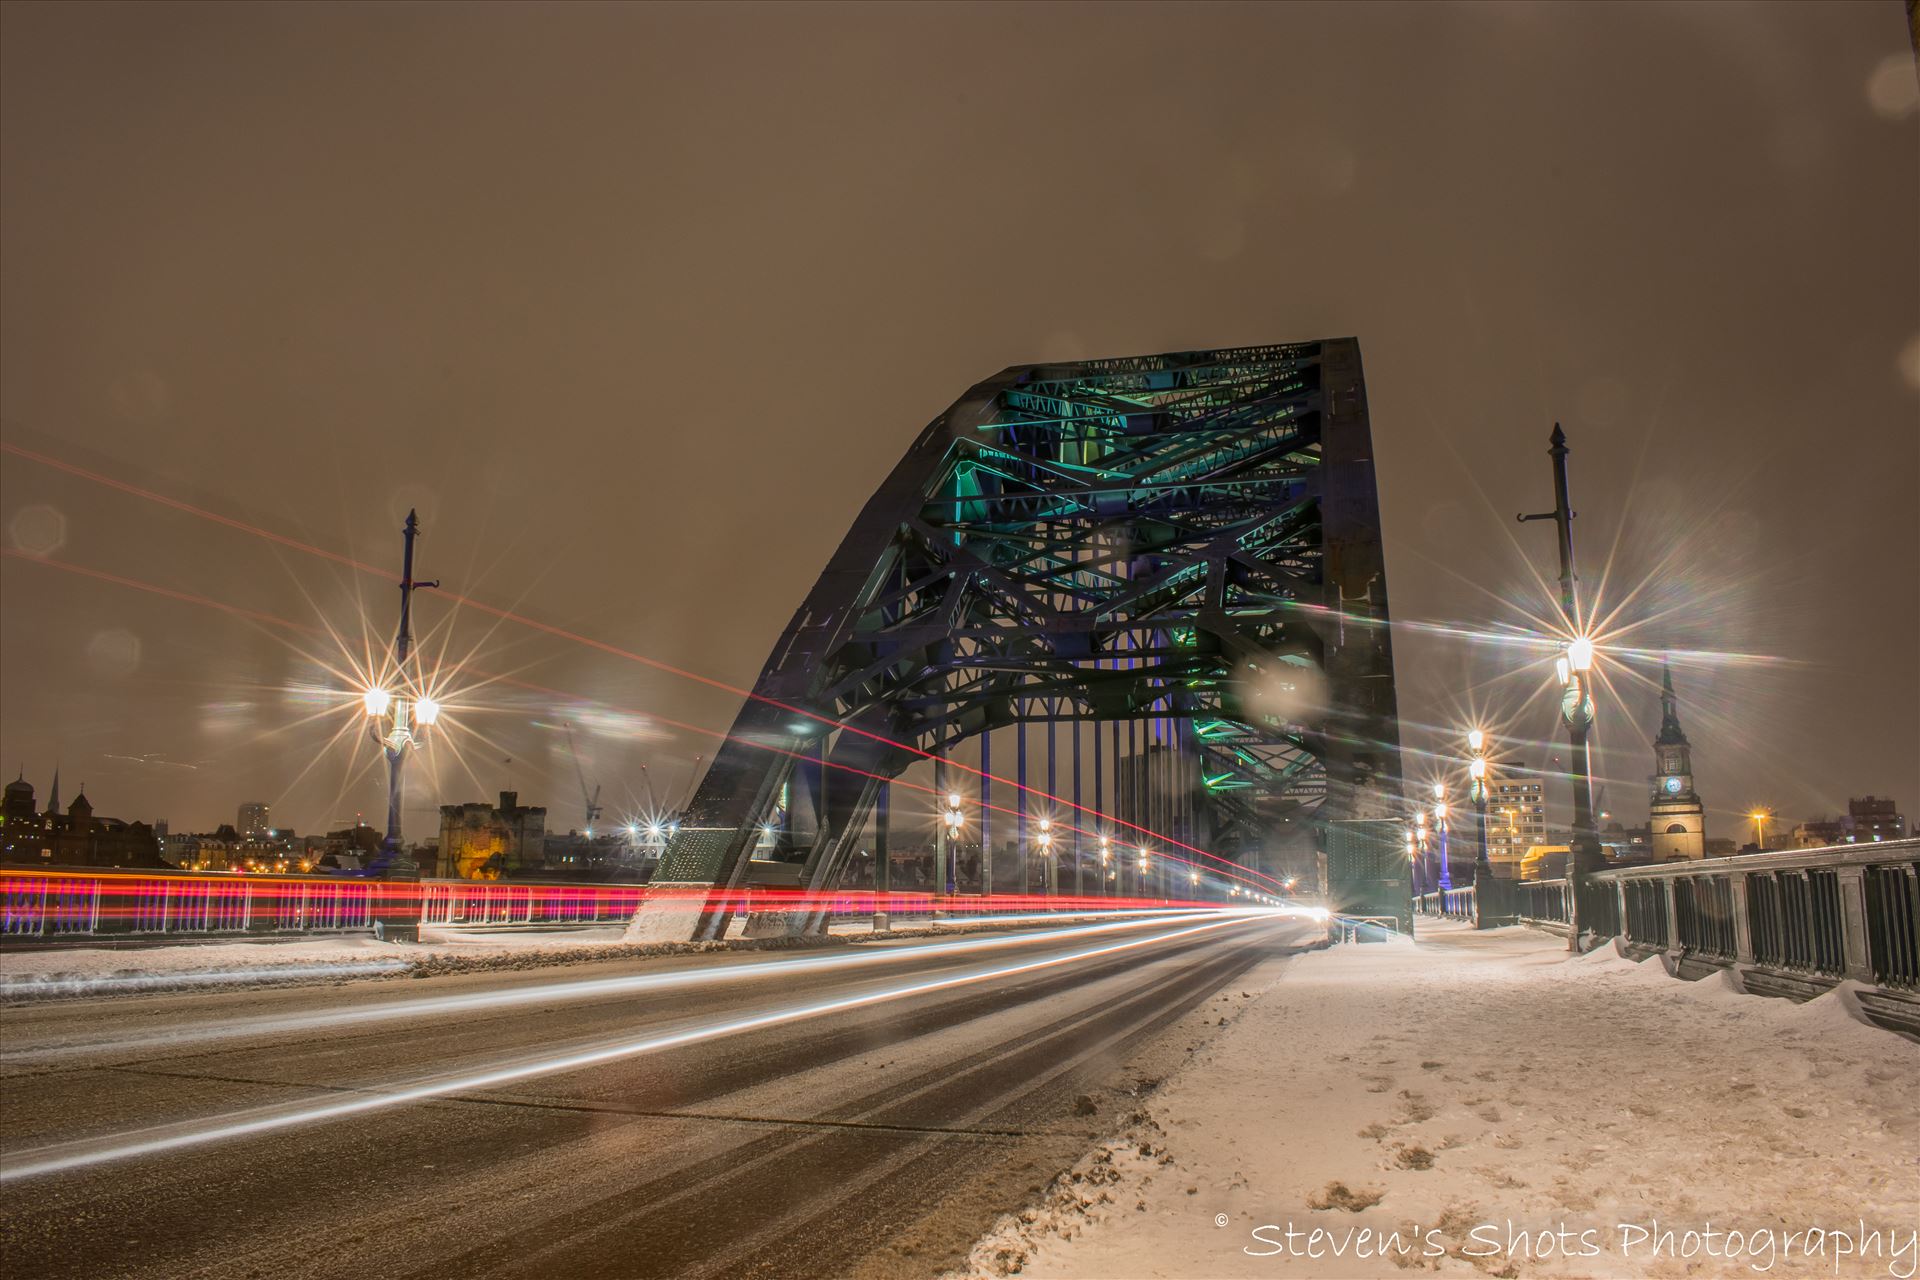 Light trails across a snowy tyne bridge (4).jpg  by Steven's Shots Photography